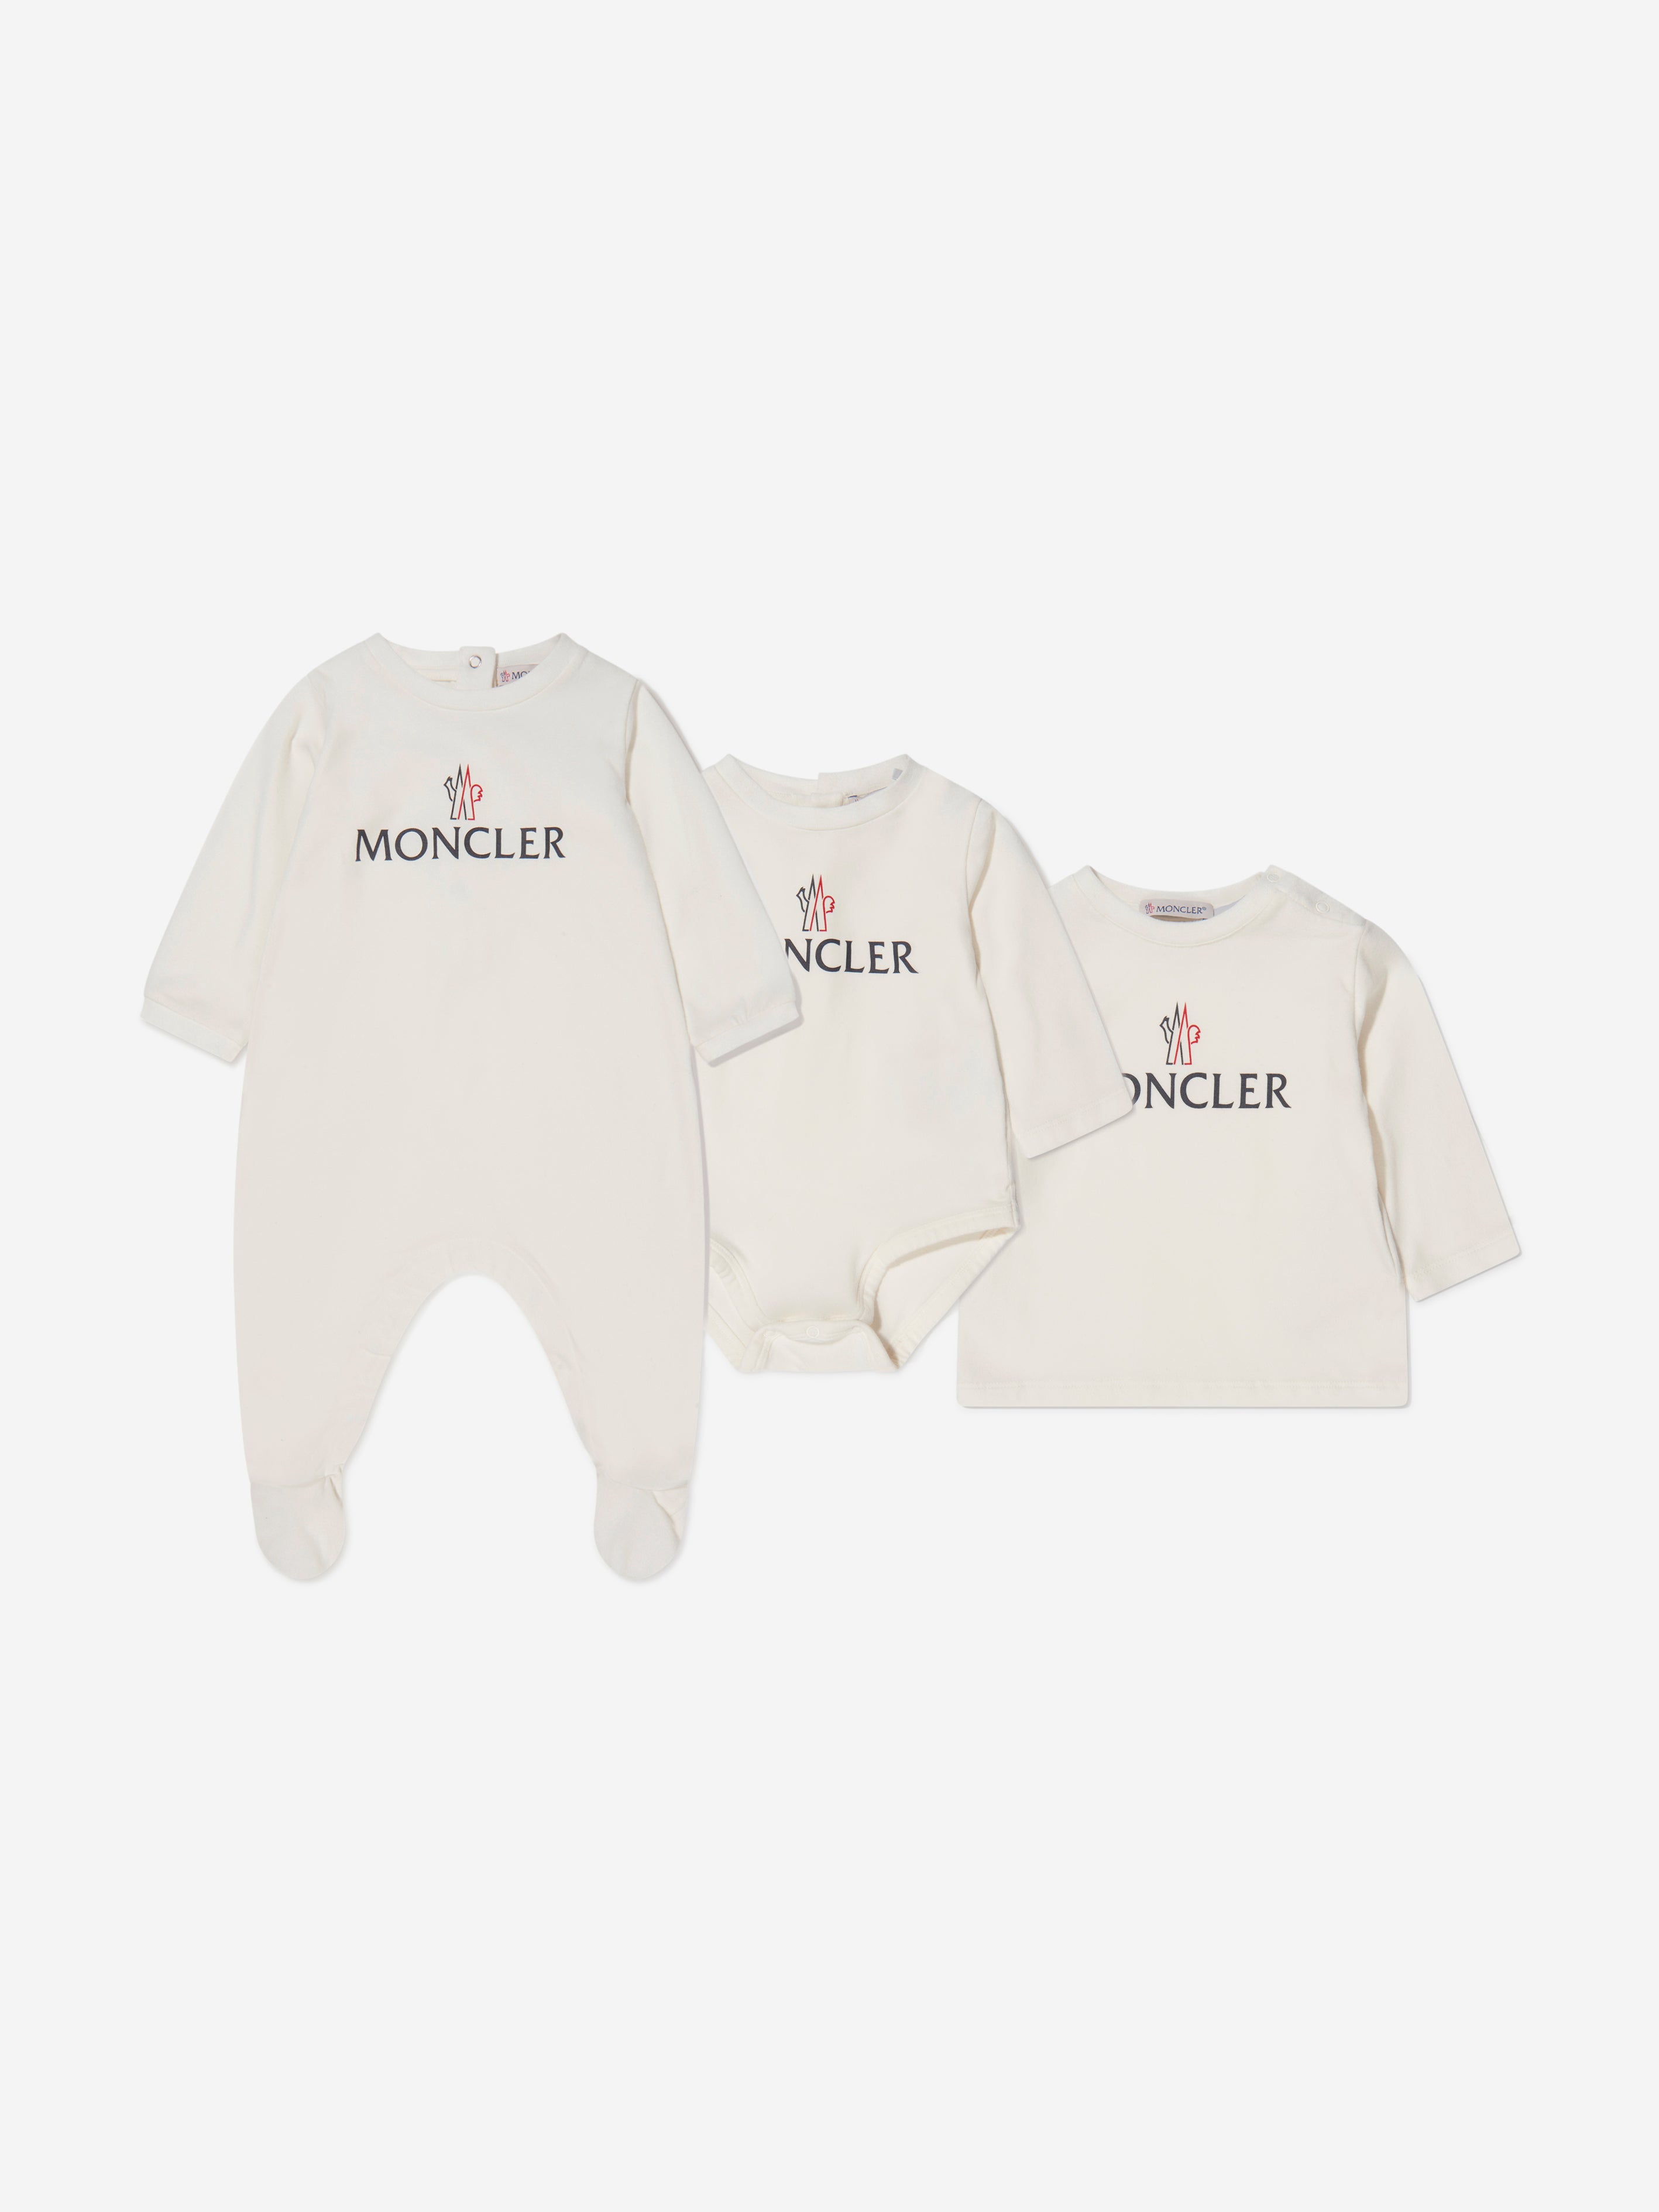 MONCLER baby set (3-6 mons old) 直営ストア - アウター